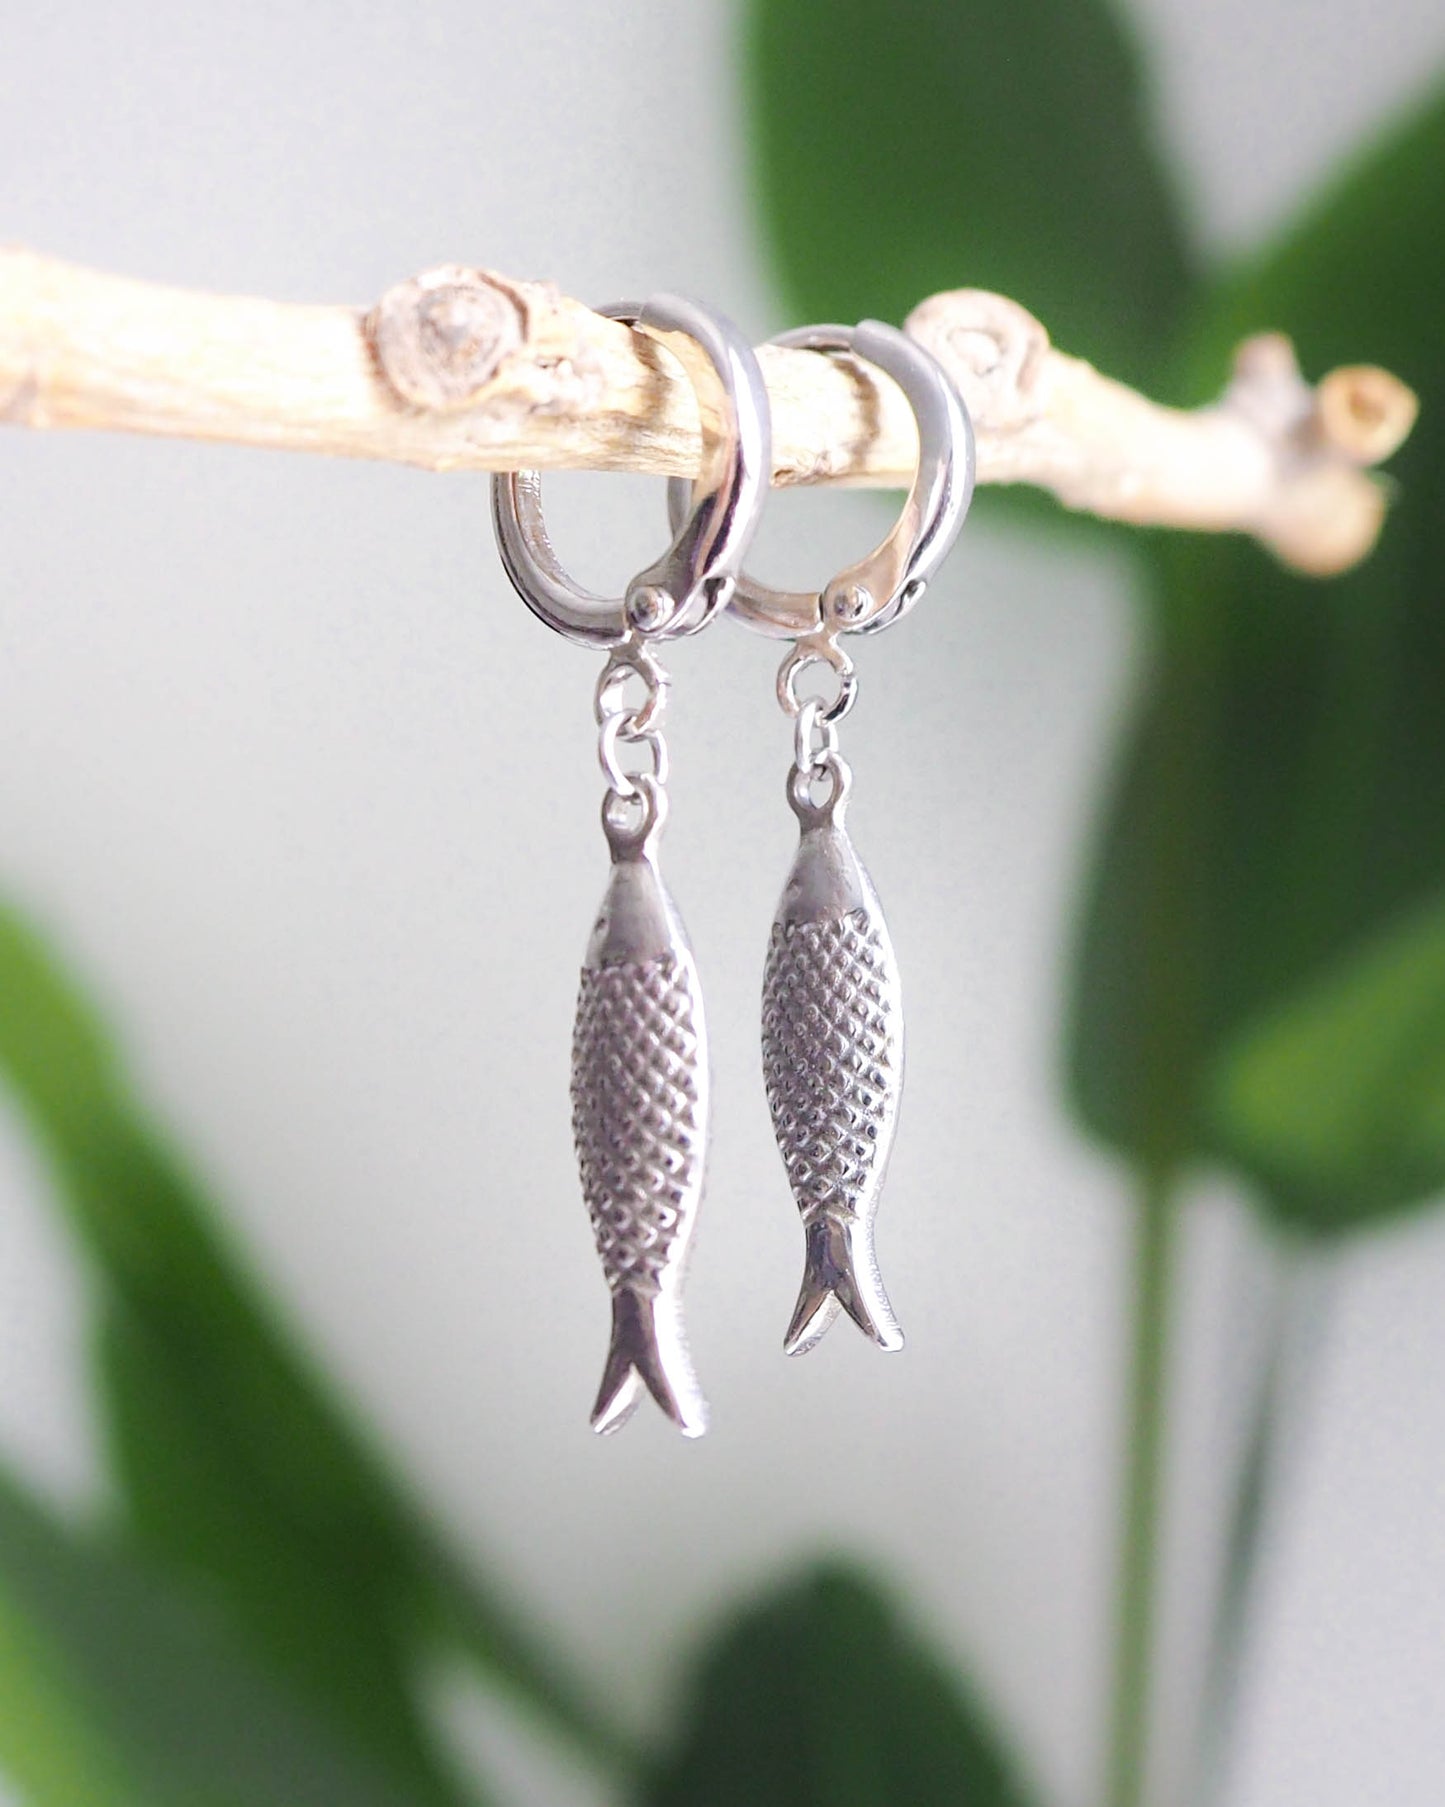 Silver Sardine Earrings - Coastal Jewelry from Portugal, seabylou, Sea by Lou, Fish earrings, Portuguese Sardines